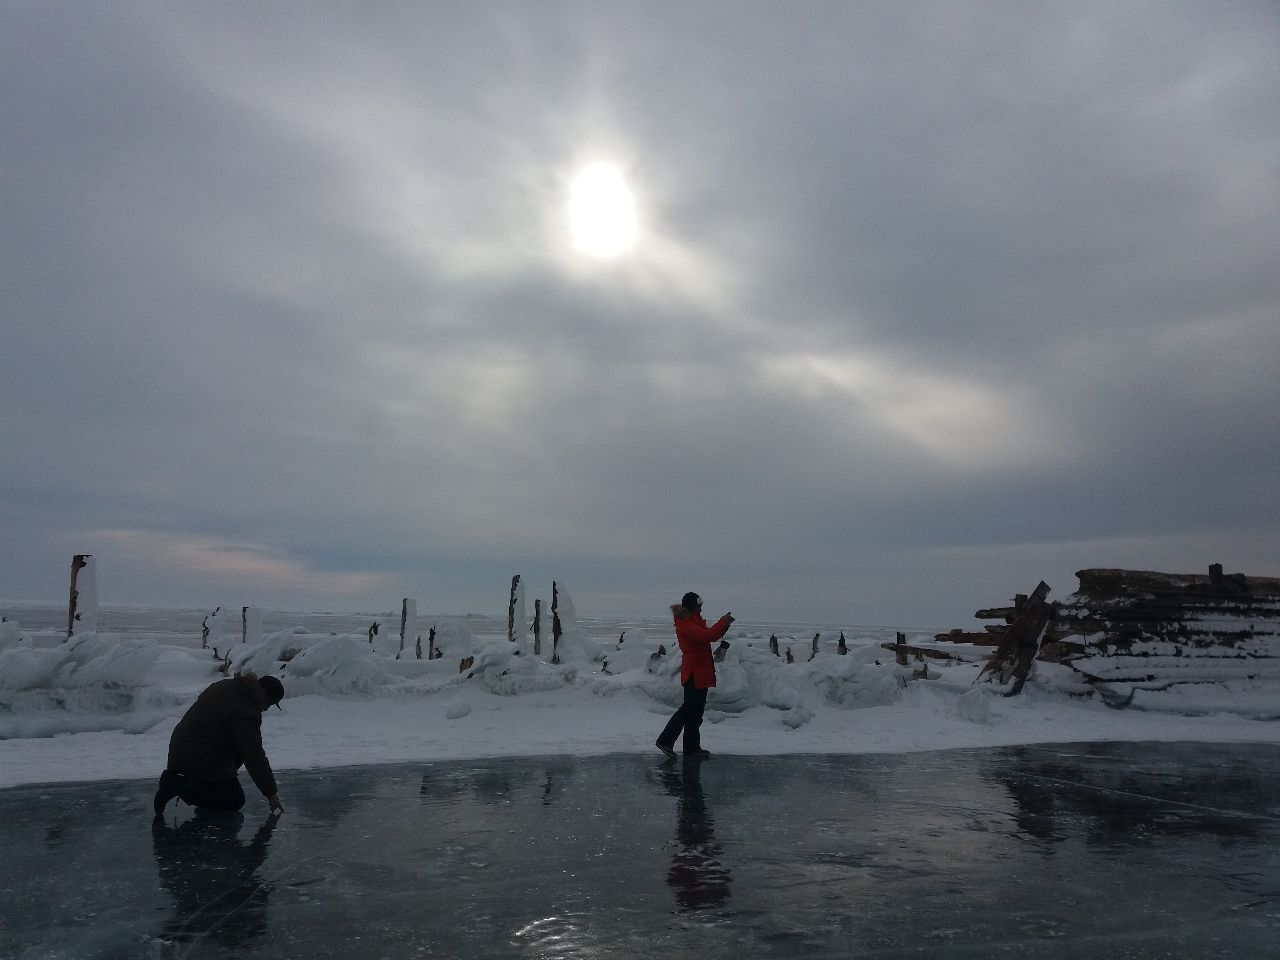 И селфи селфи селфи… - Поездка на зимний Байкал 5-13 февраля 2021 год.